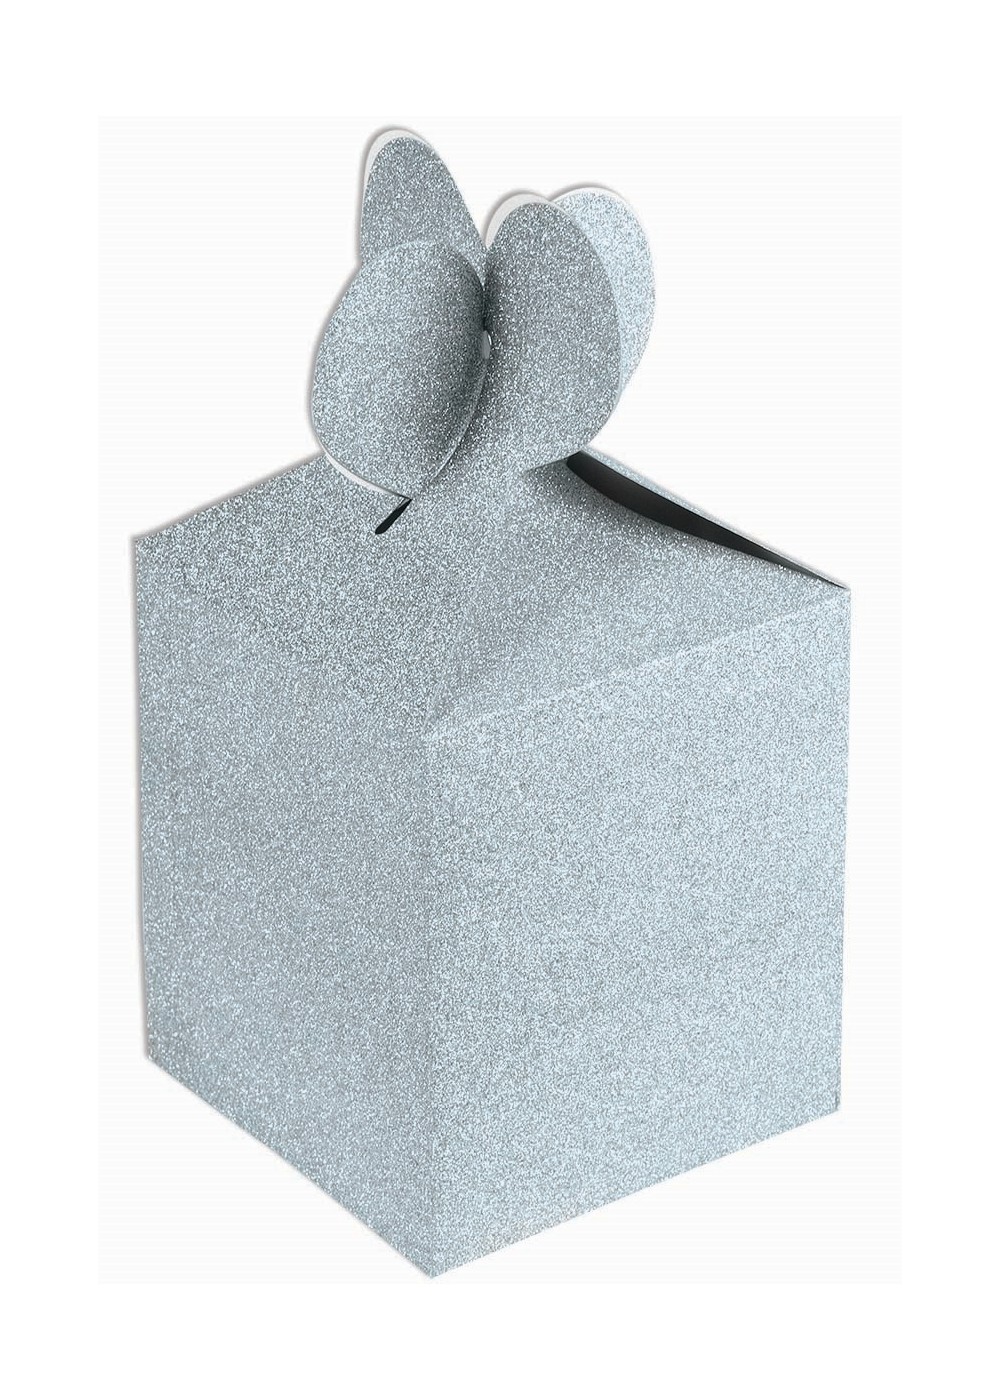 Silver Diamond Gift Boxes